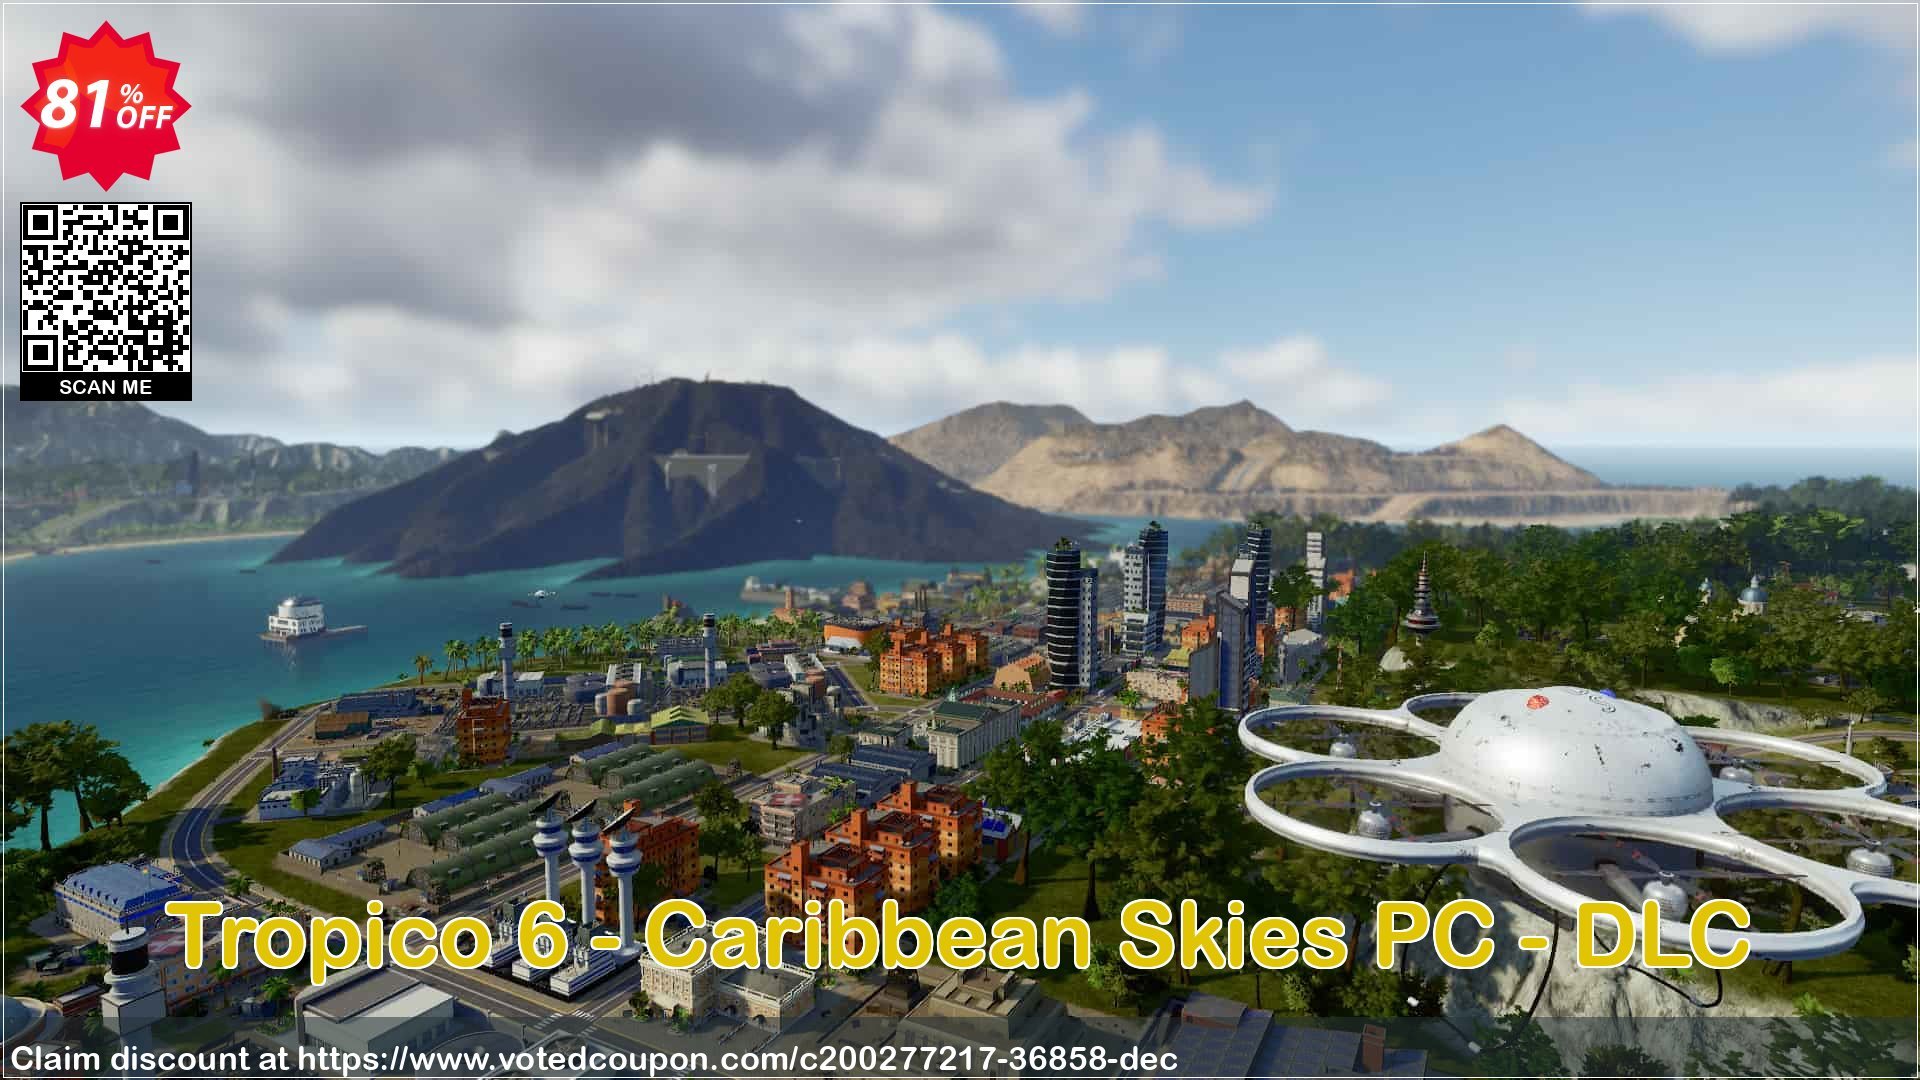 Tropico 6 - Caribbean Skies PC - DLC Coupon Code Apr 2024, 81% OFF - VotedCoupon